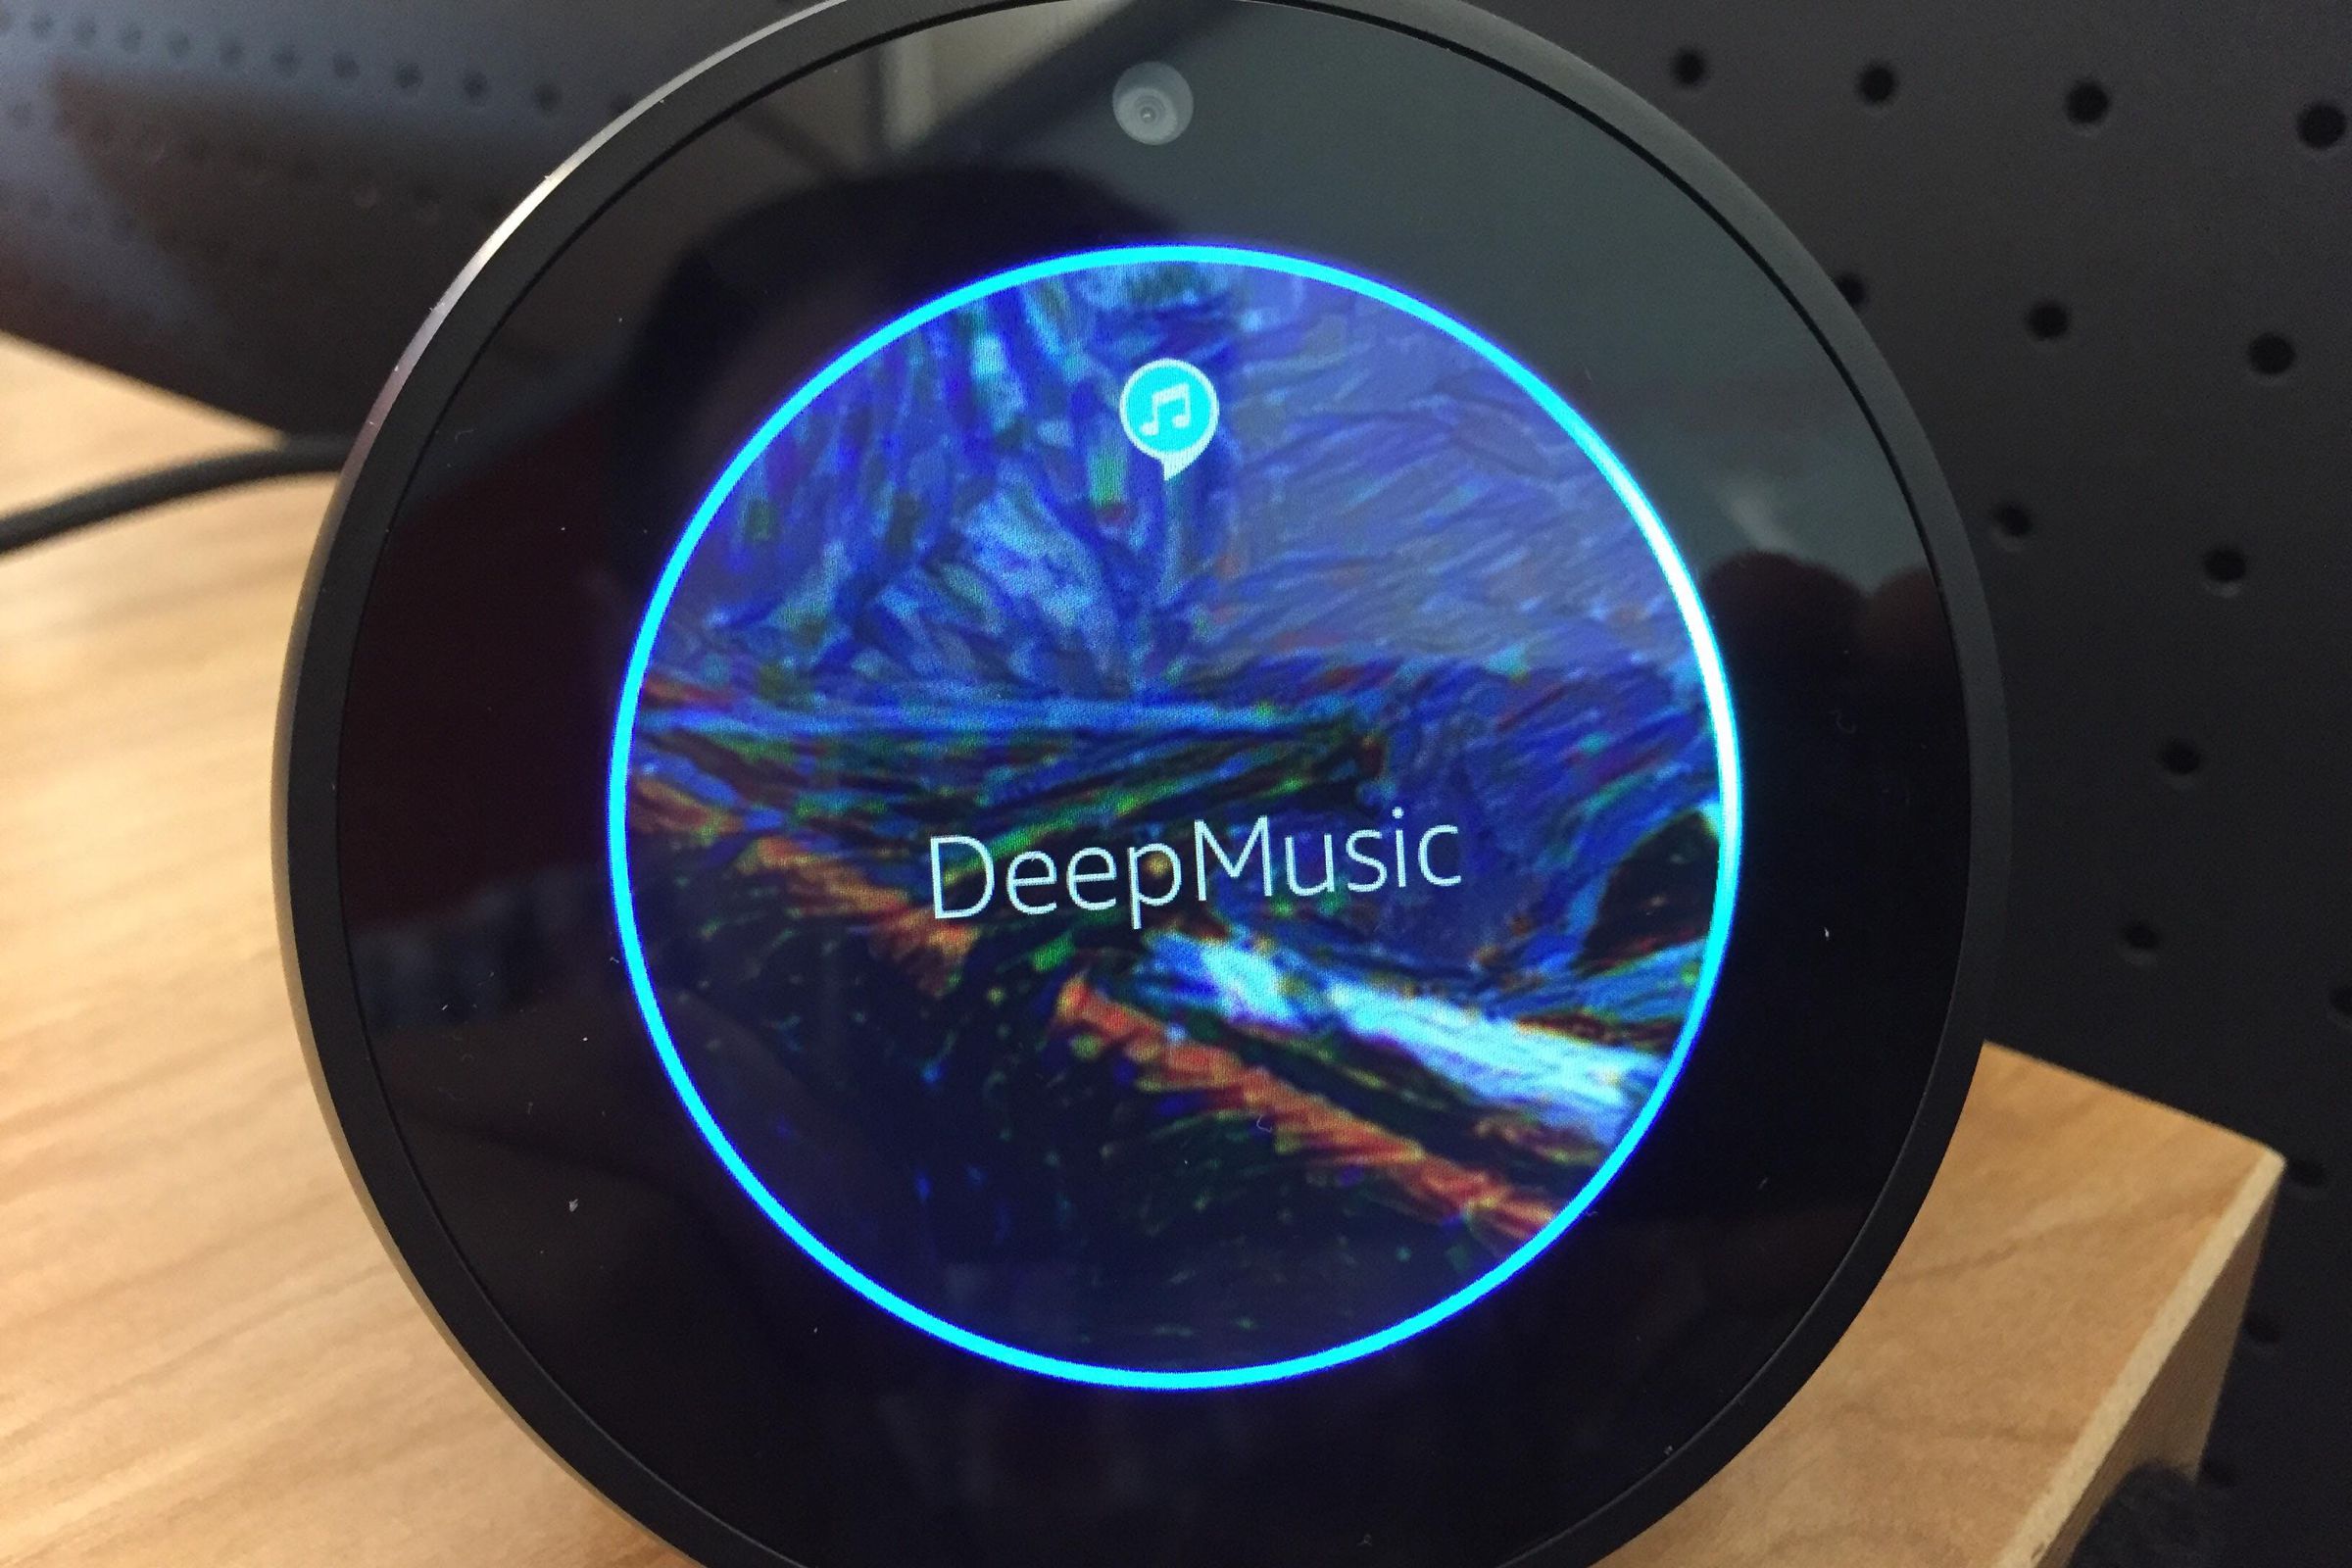 DeepMusic Alexa skill